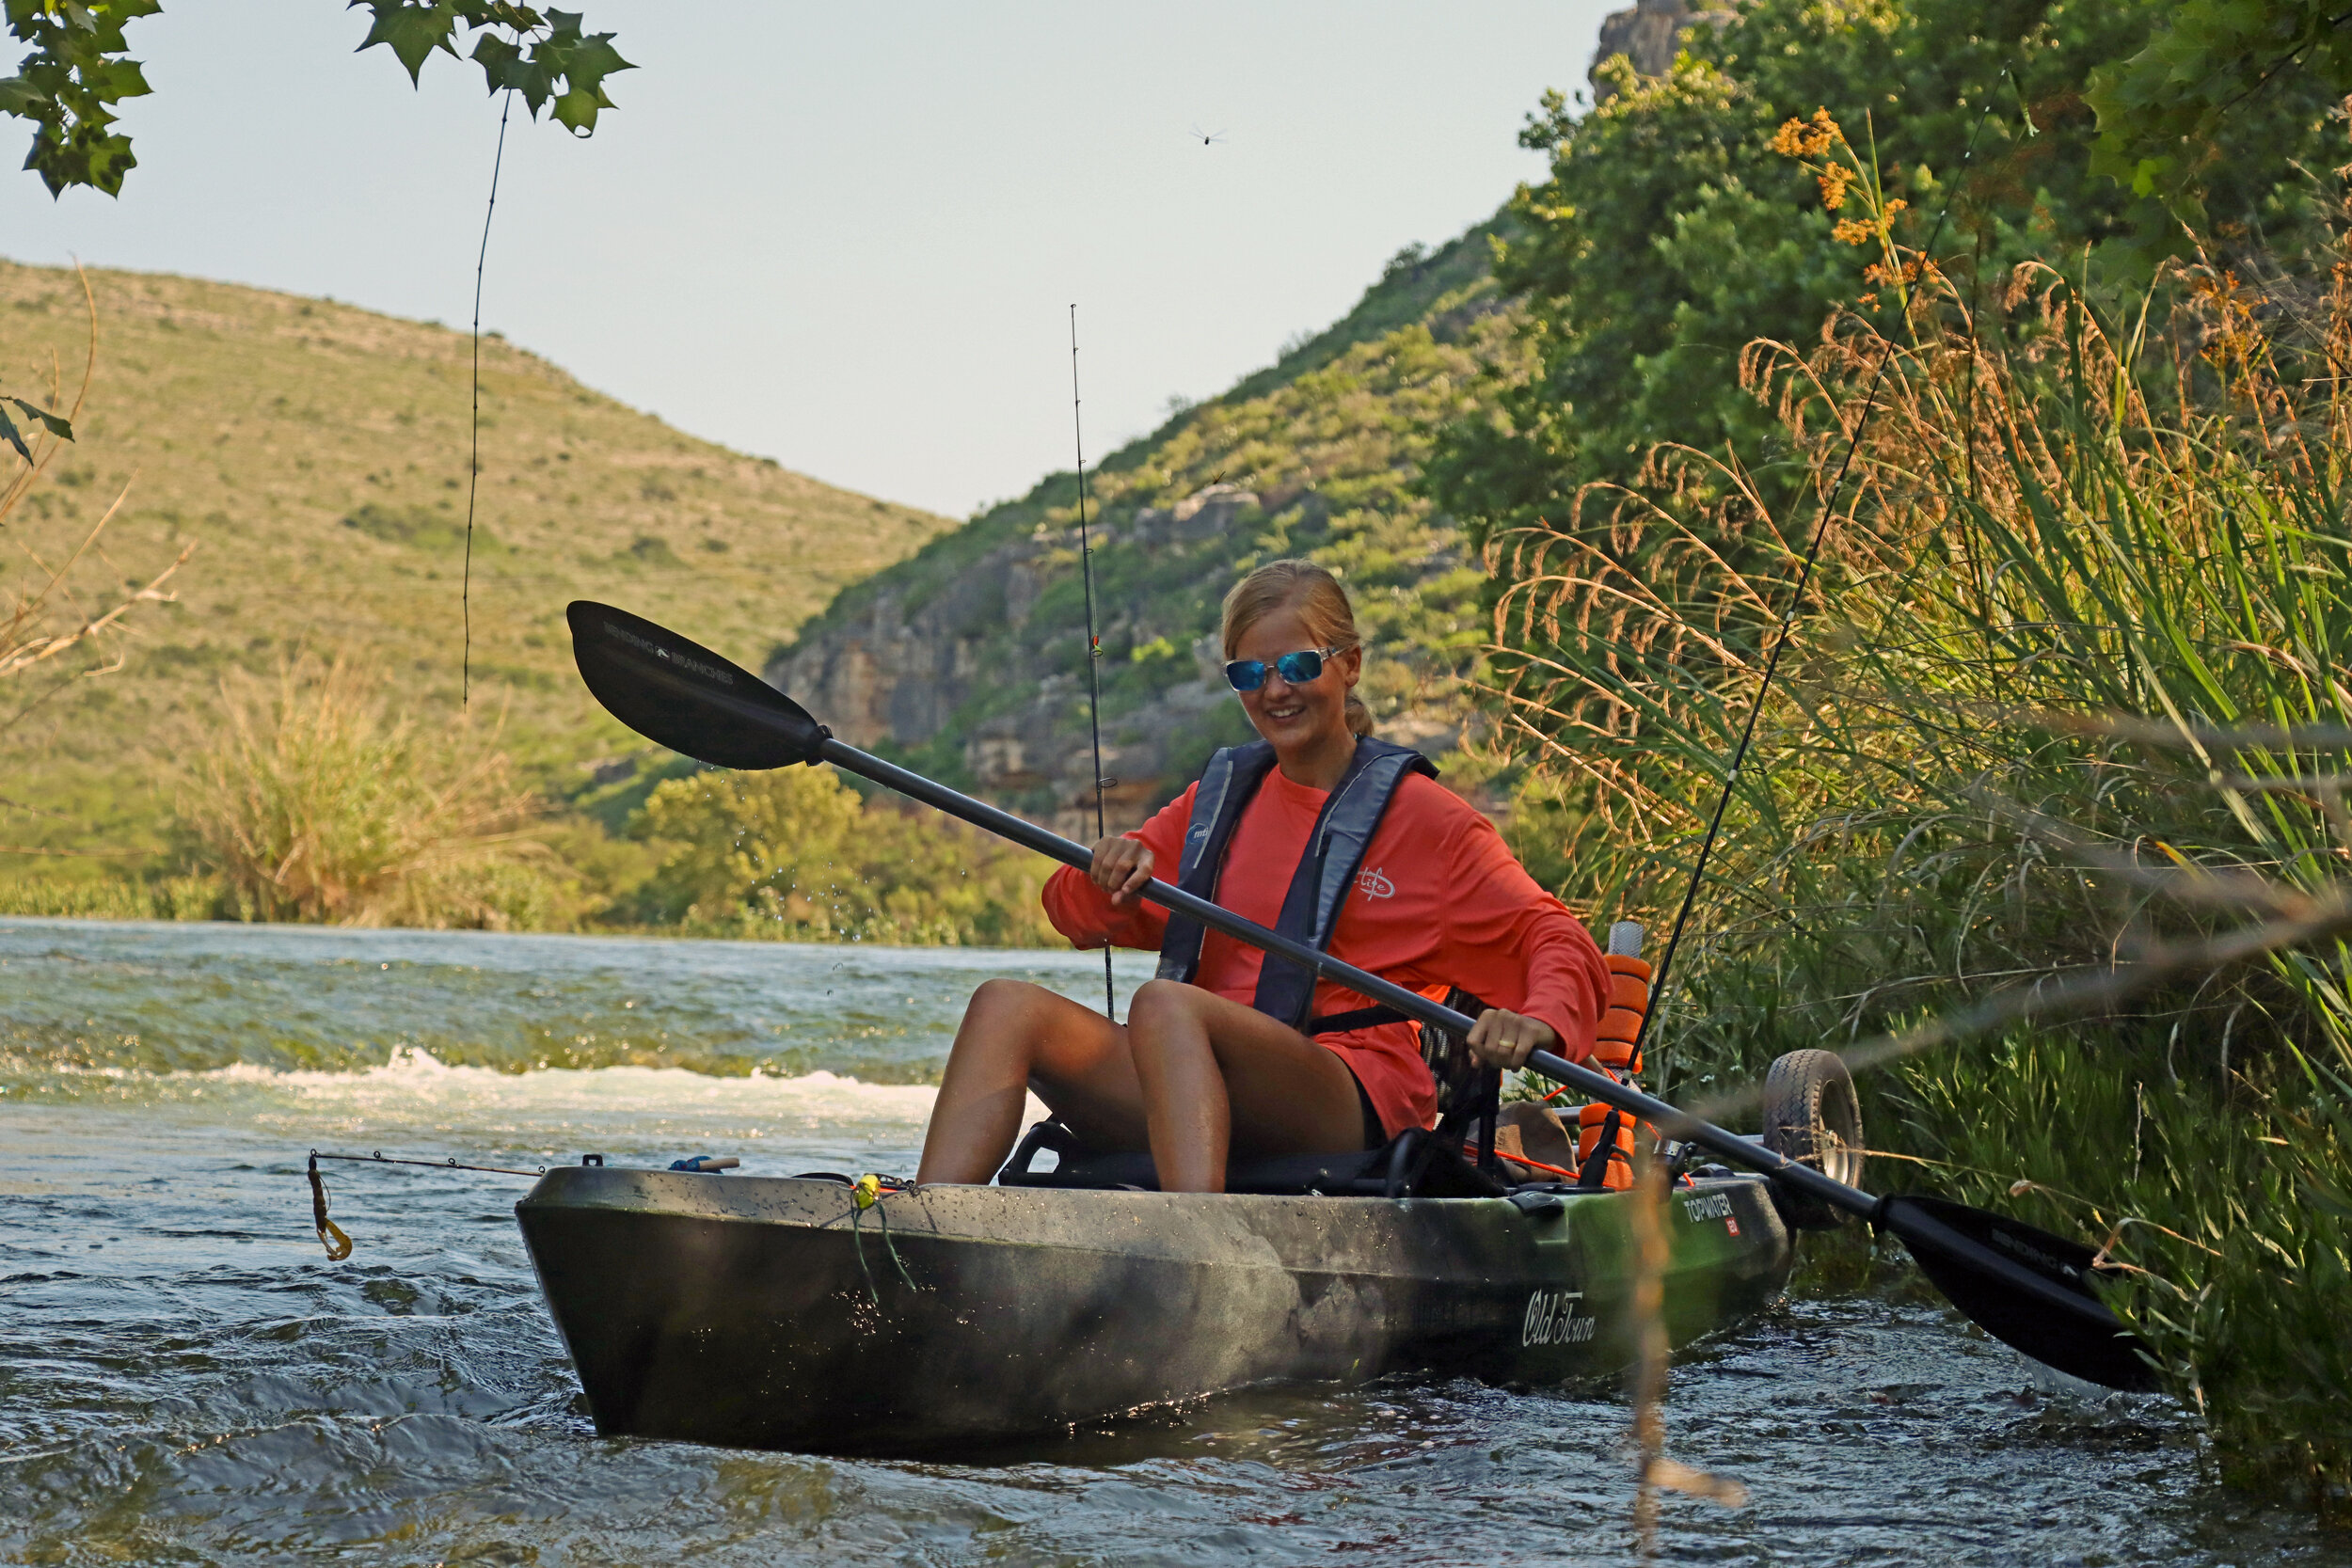 Old Town Topwater 120 Kayak Review - Is it the Best Budget Fishing Kayak? —  Texas Kayak Fisher